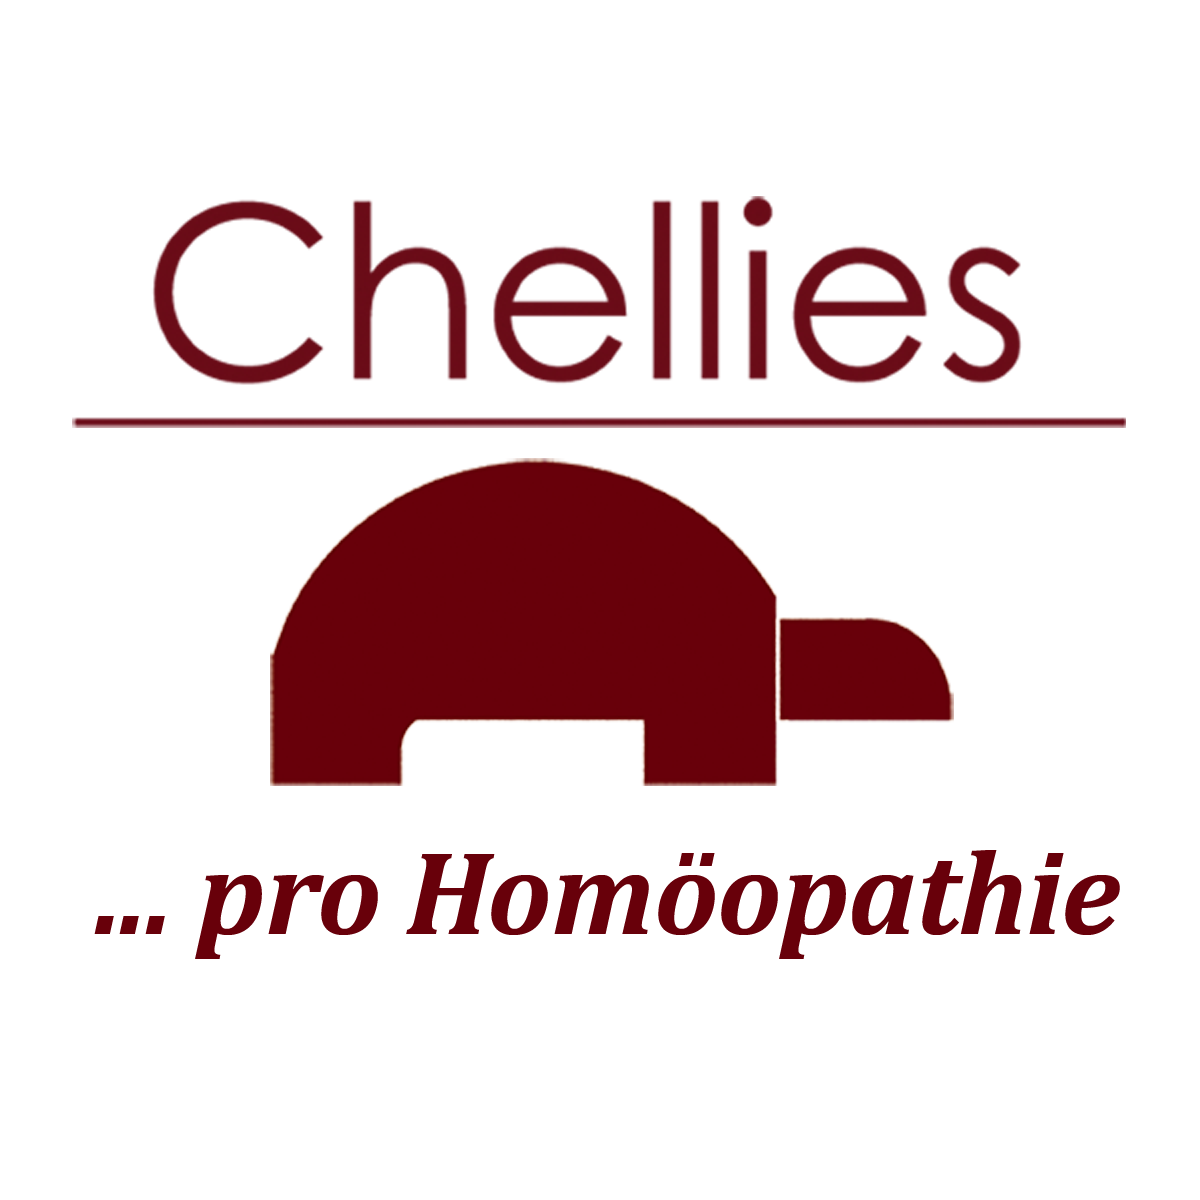 Chellies ... pro Homöopathie